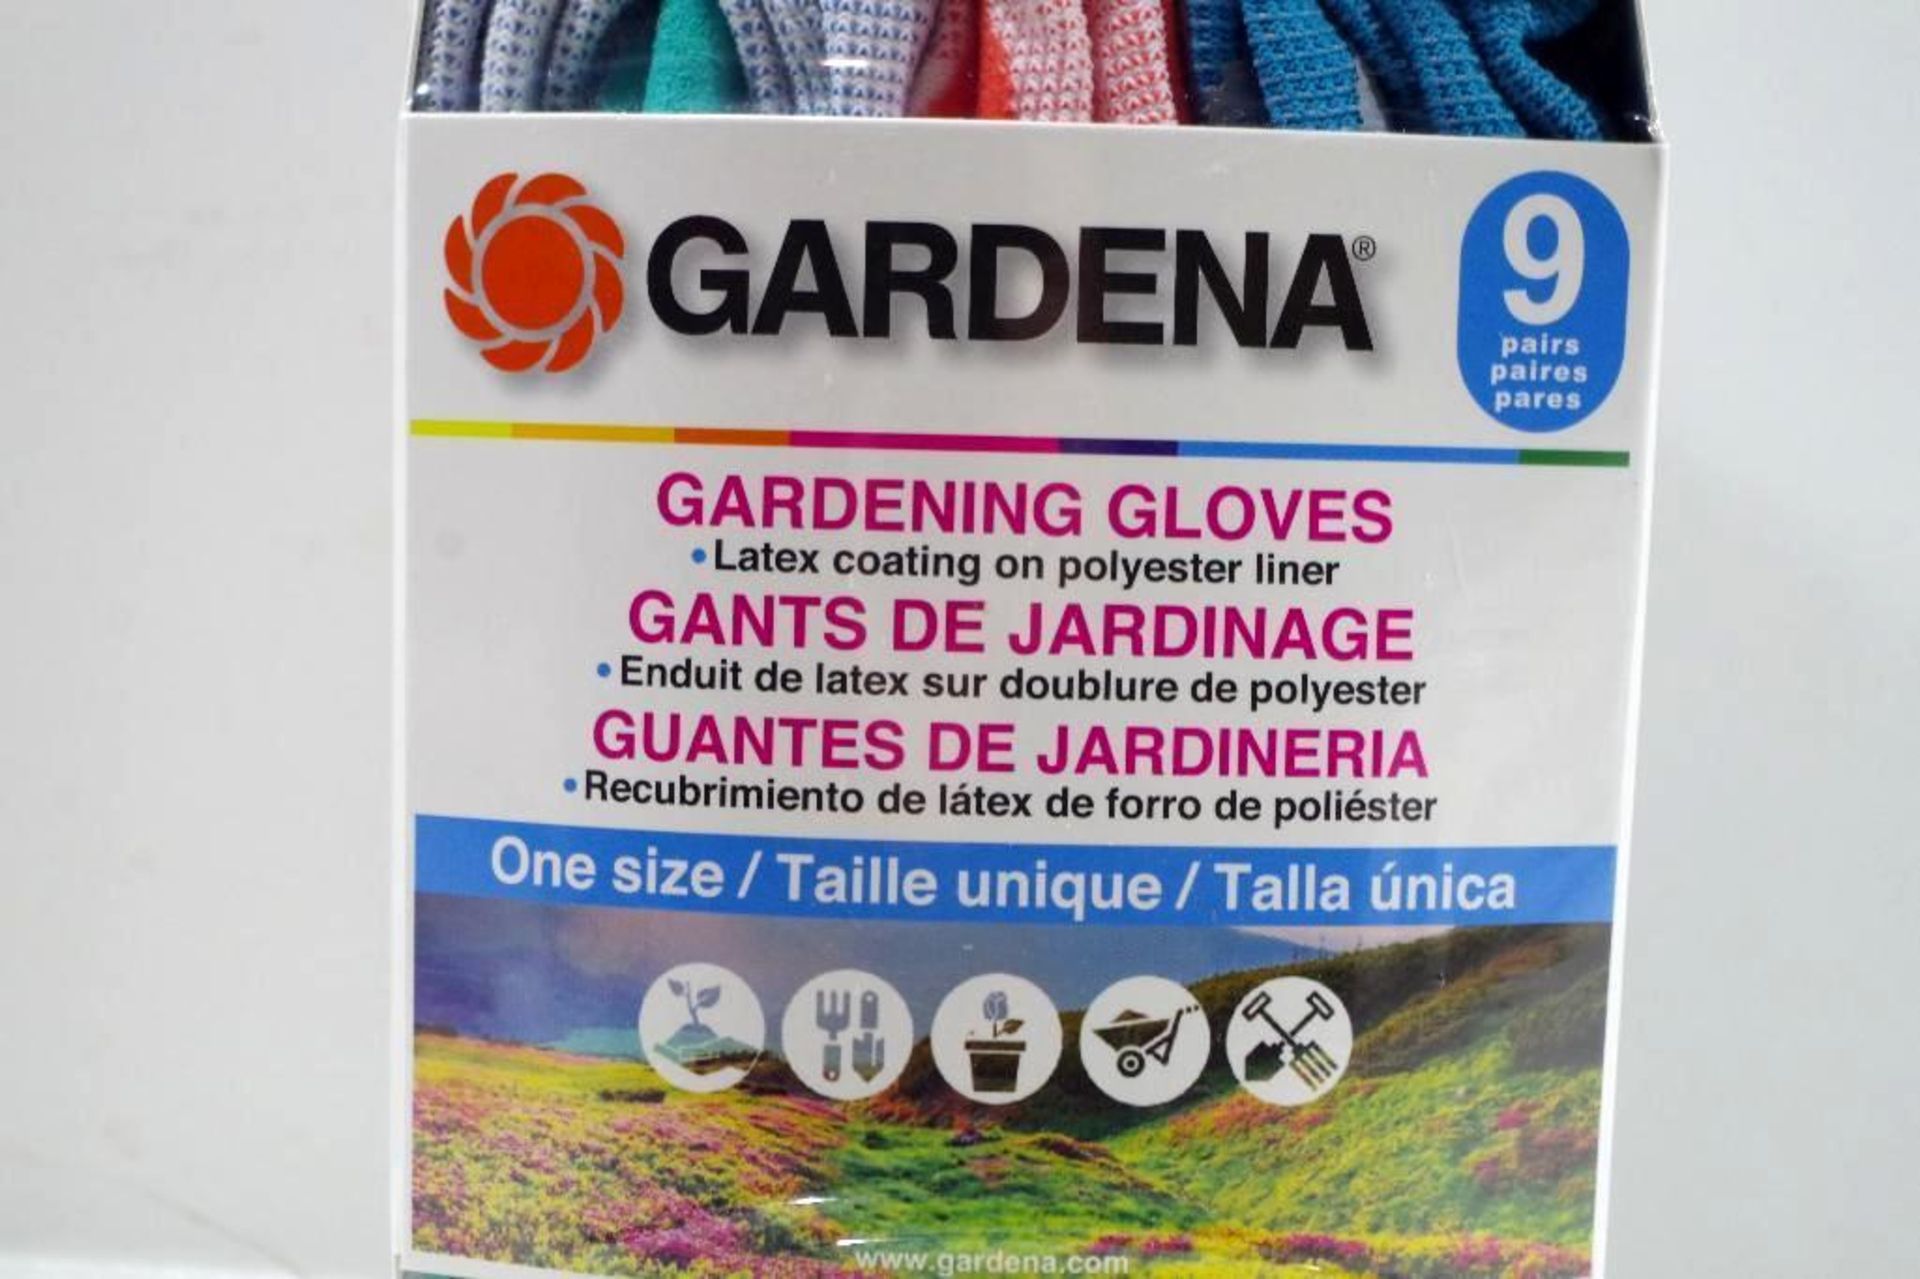 [9] NEW GARDENA Latex Coated Gardening Gloves (1 pack of 9) - Image 2 of 2